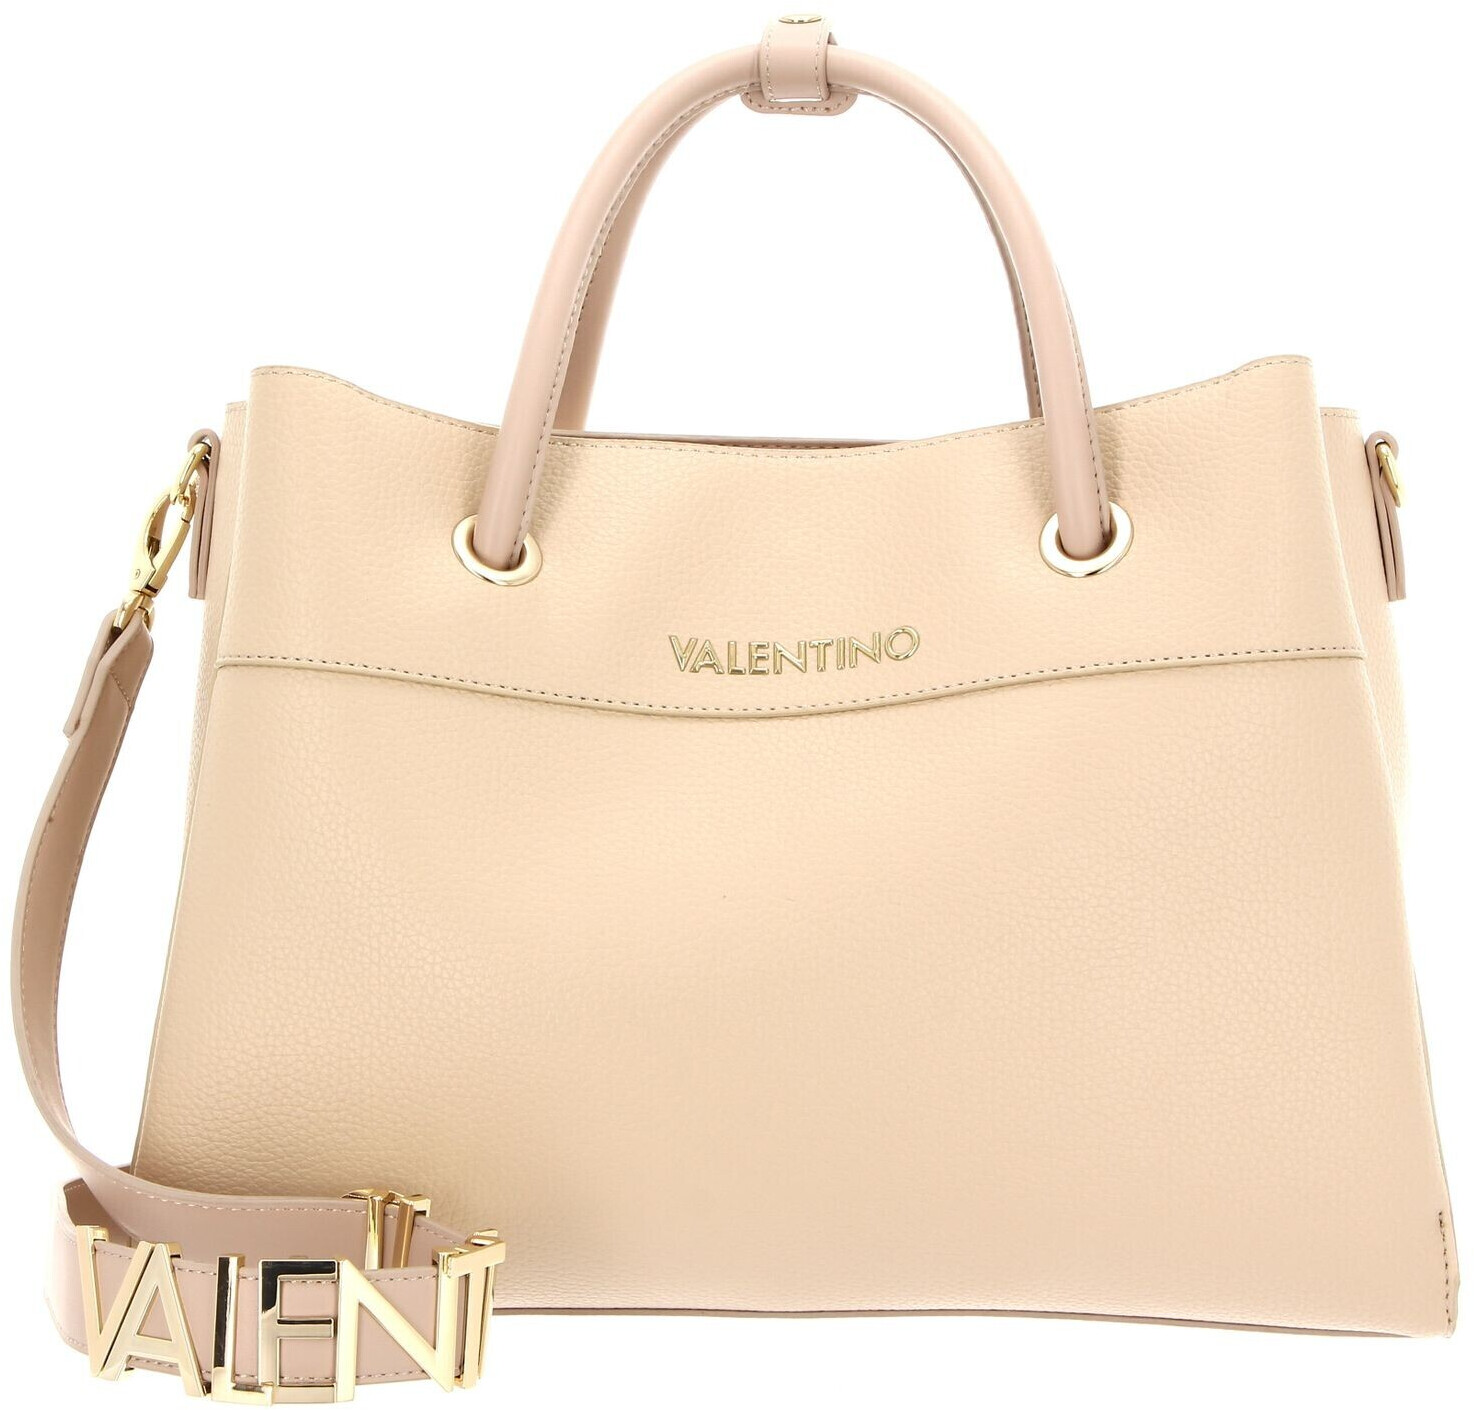 Valentino Bags Alexia Ladies Shoulder Bag in Ecru